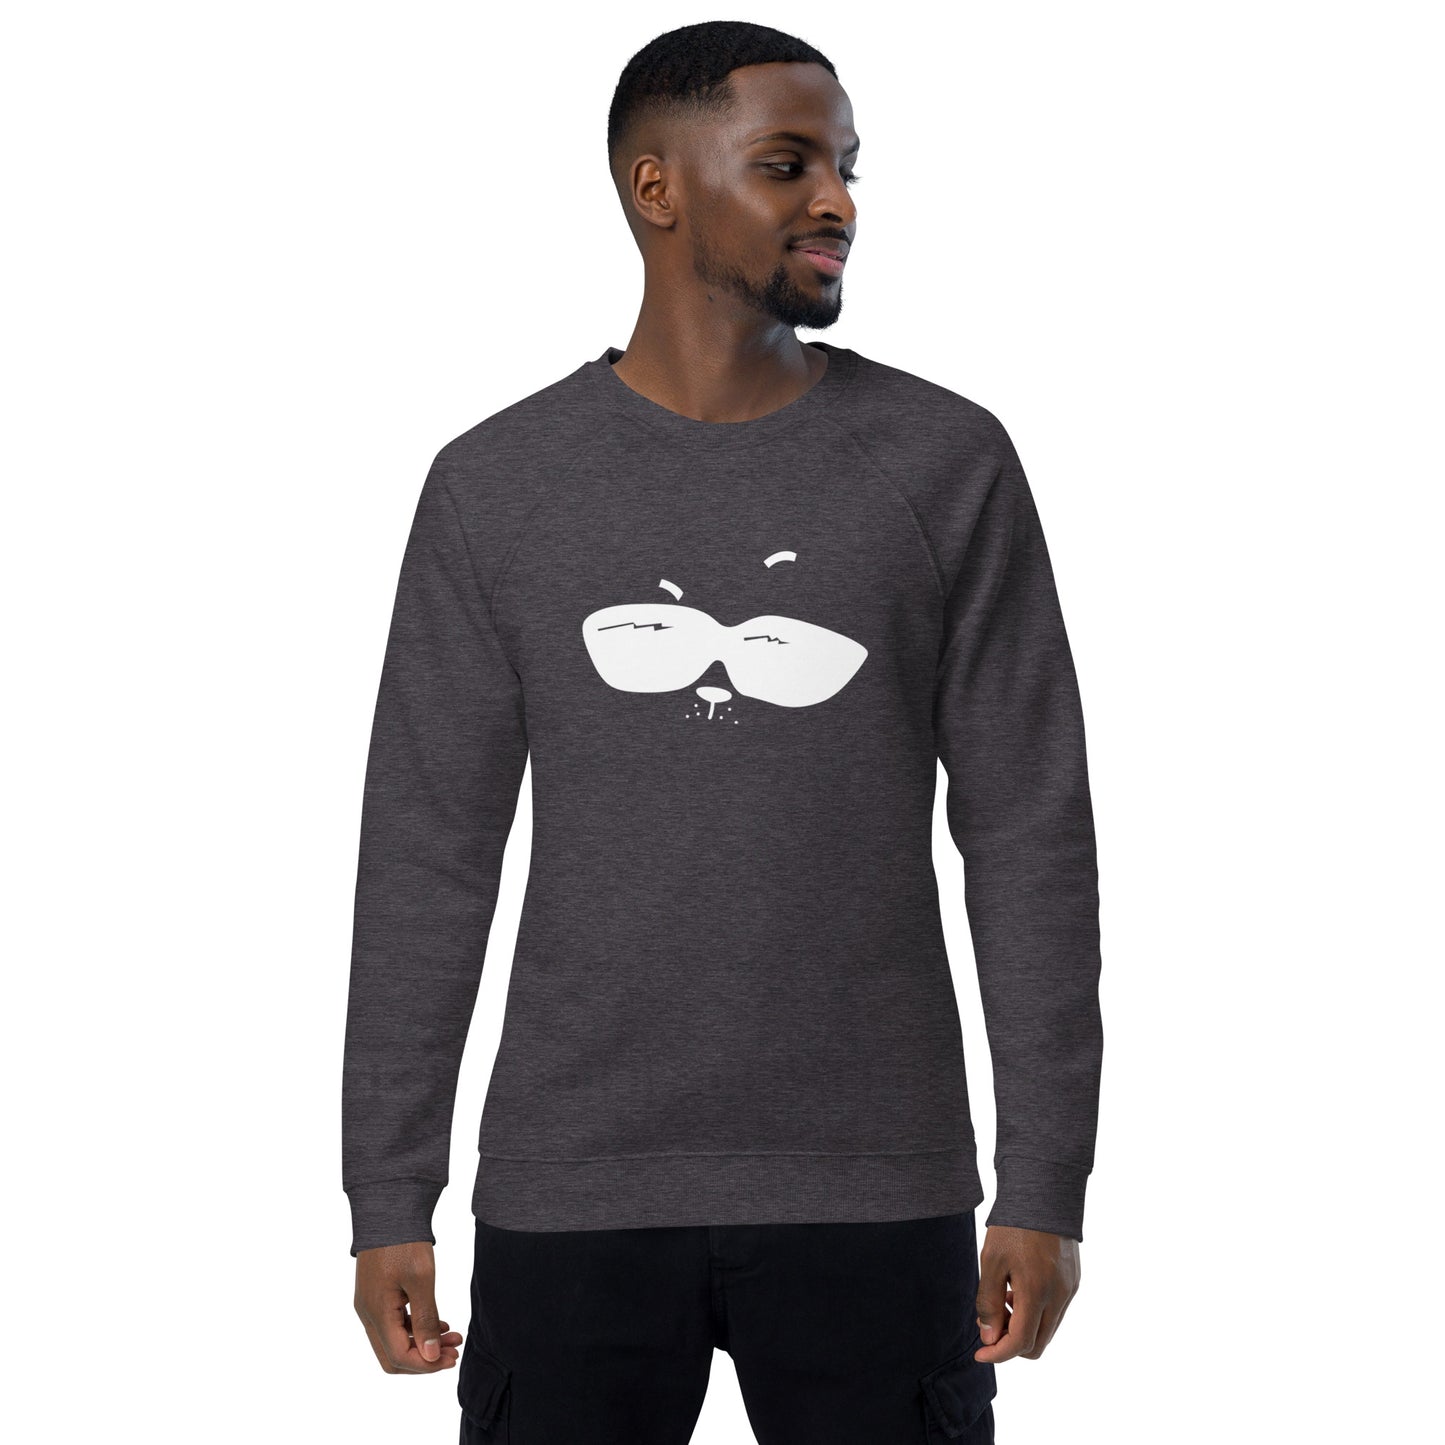 Men's Organic Sweatshirt "I See You"